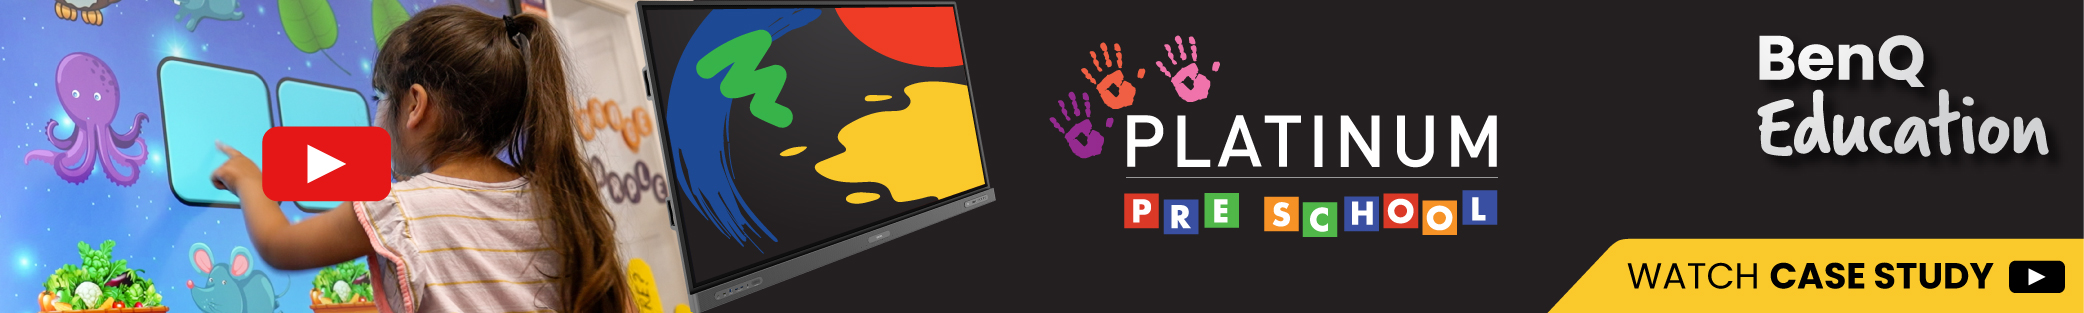 BenQ and Platinum Preschool partnership in inclusion